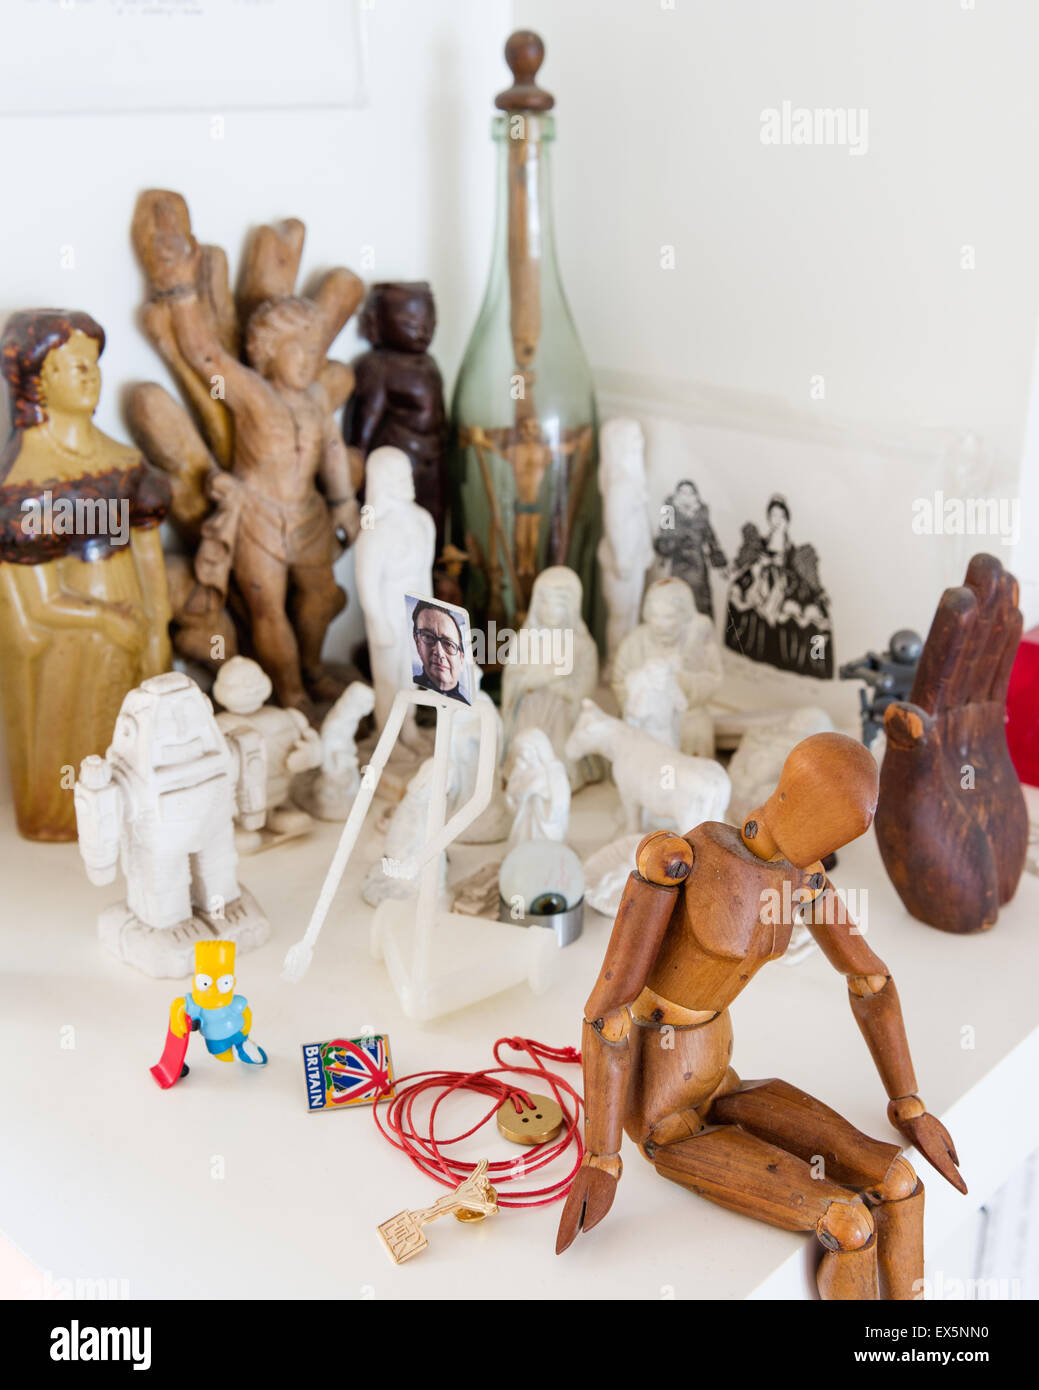 Artistas Maniqui de madera rodeada de pequeños figurines esculpidos Foto de stock